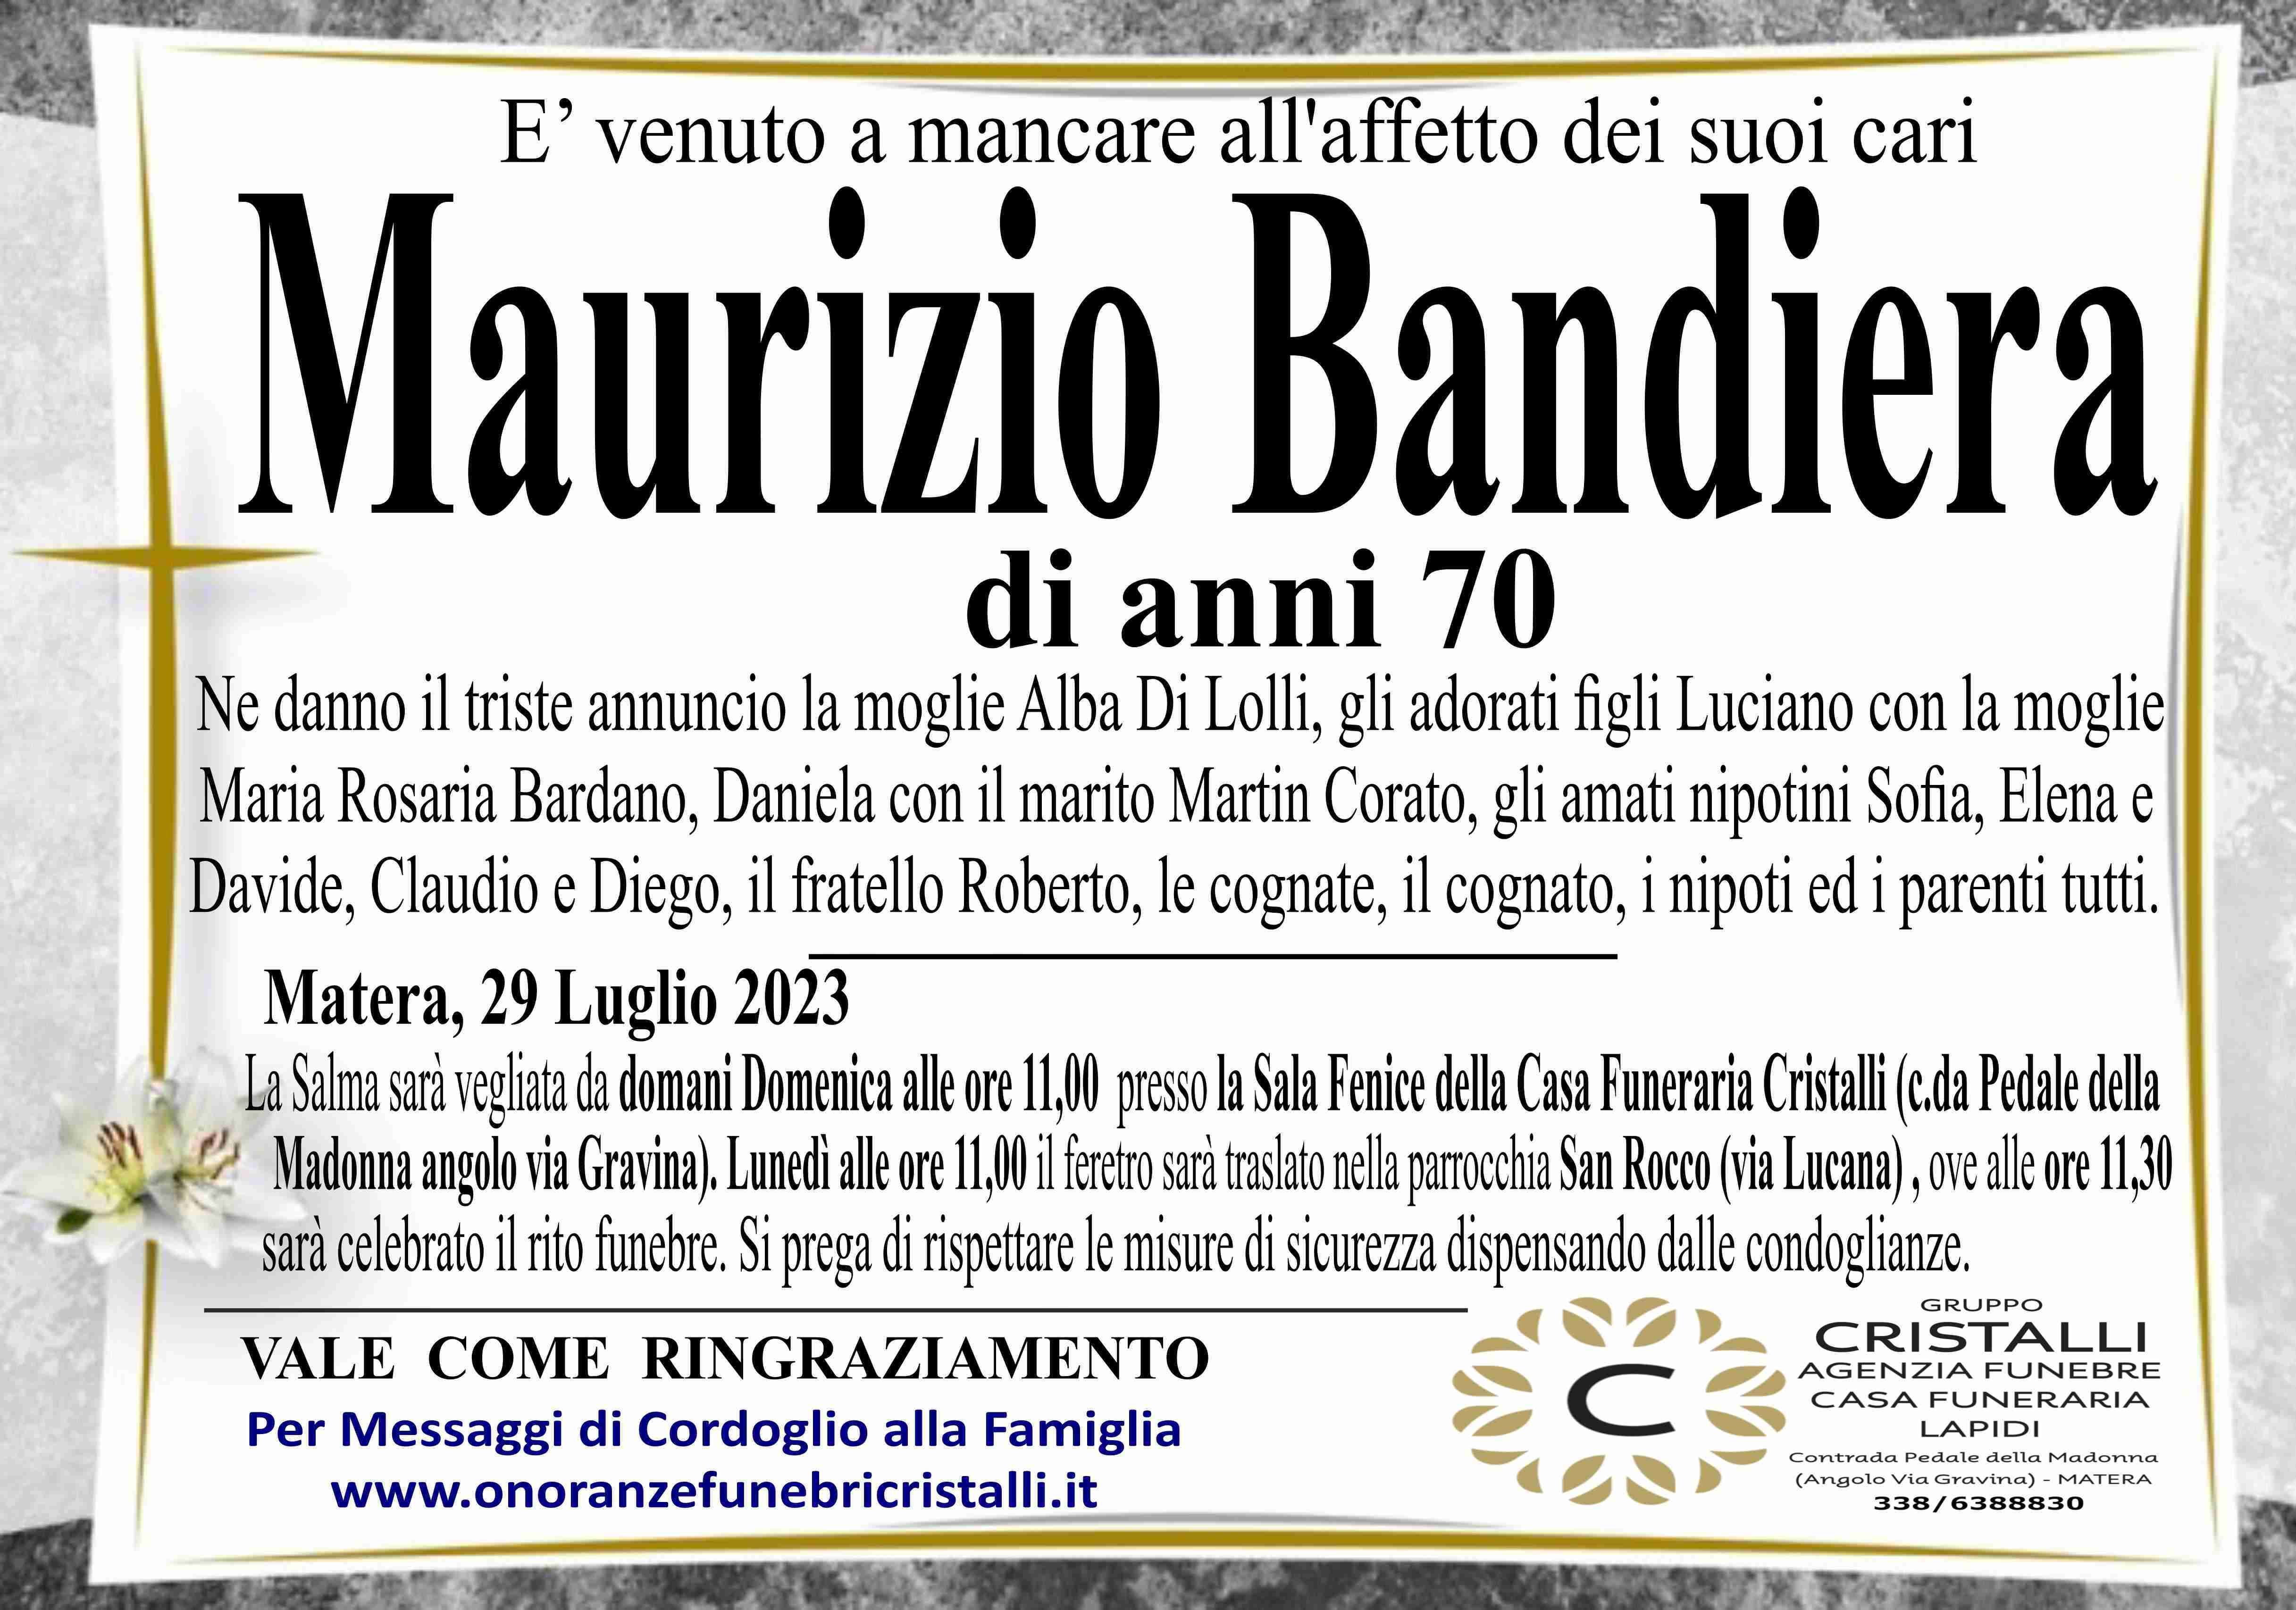 Maurizio Bandiero